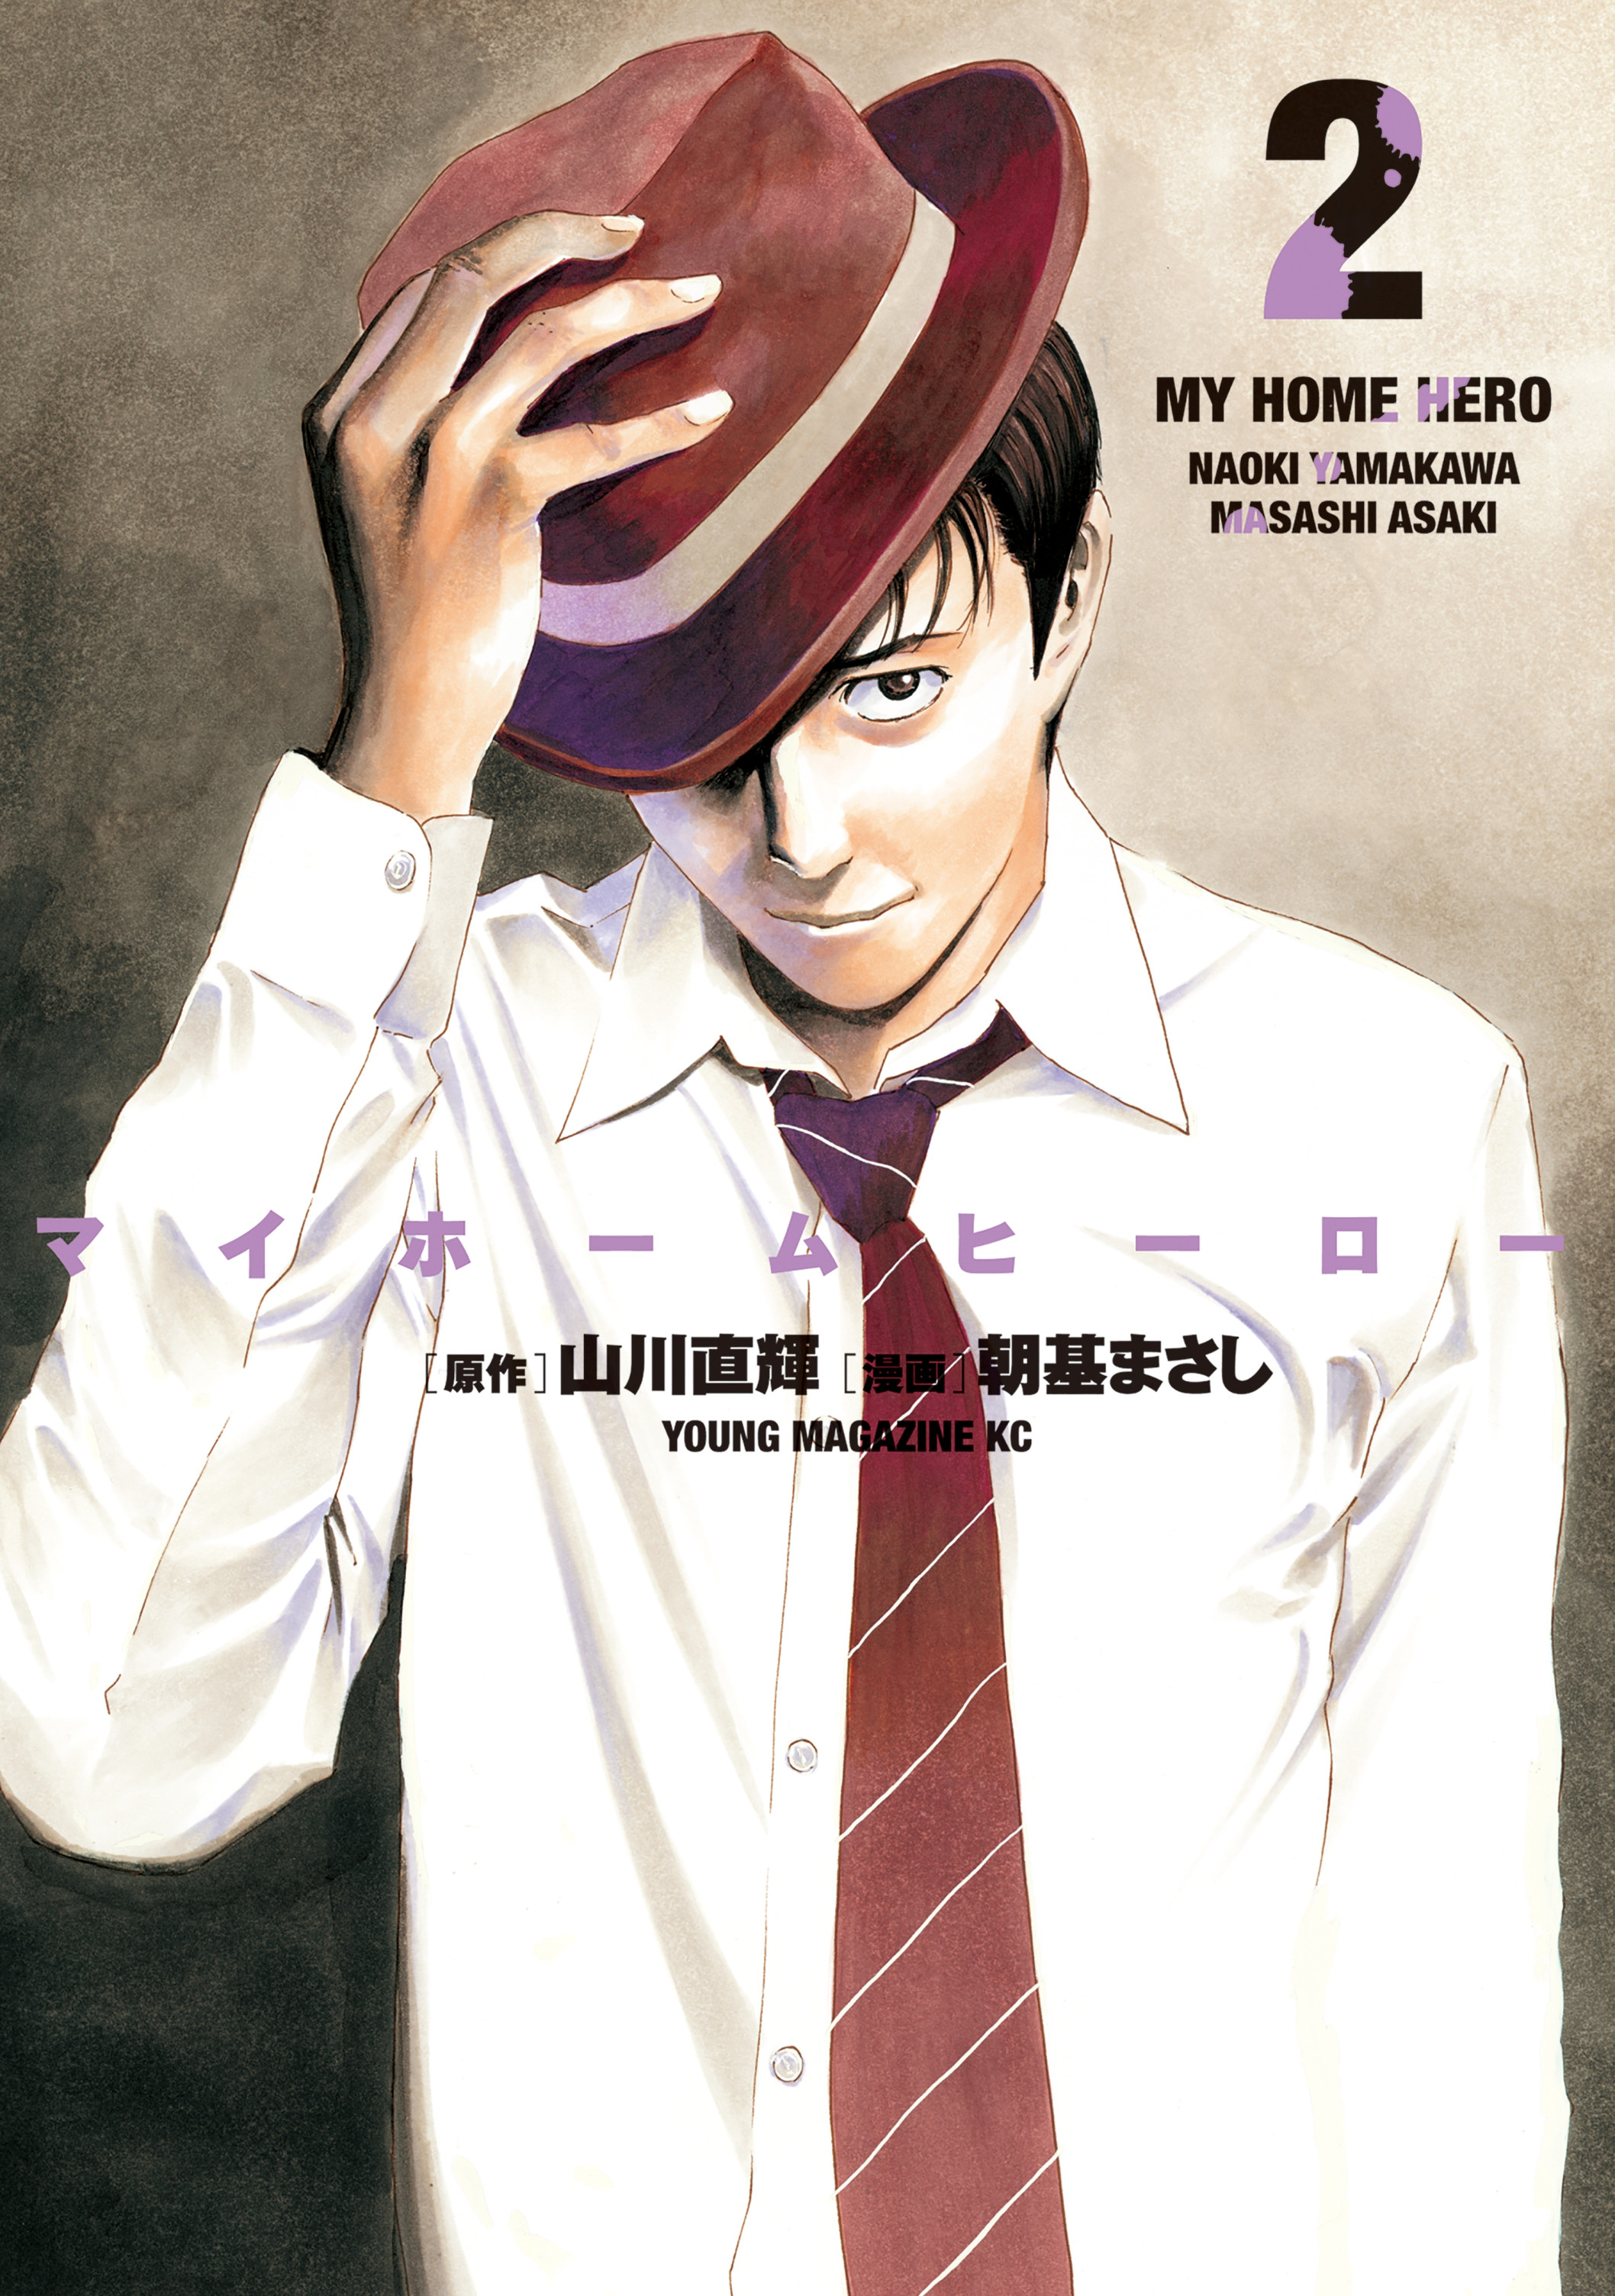 My Home Hero Image by Asaki Masashi #3813932 - Zerochan Anime